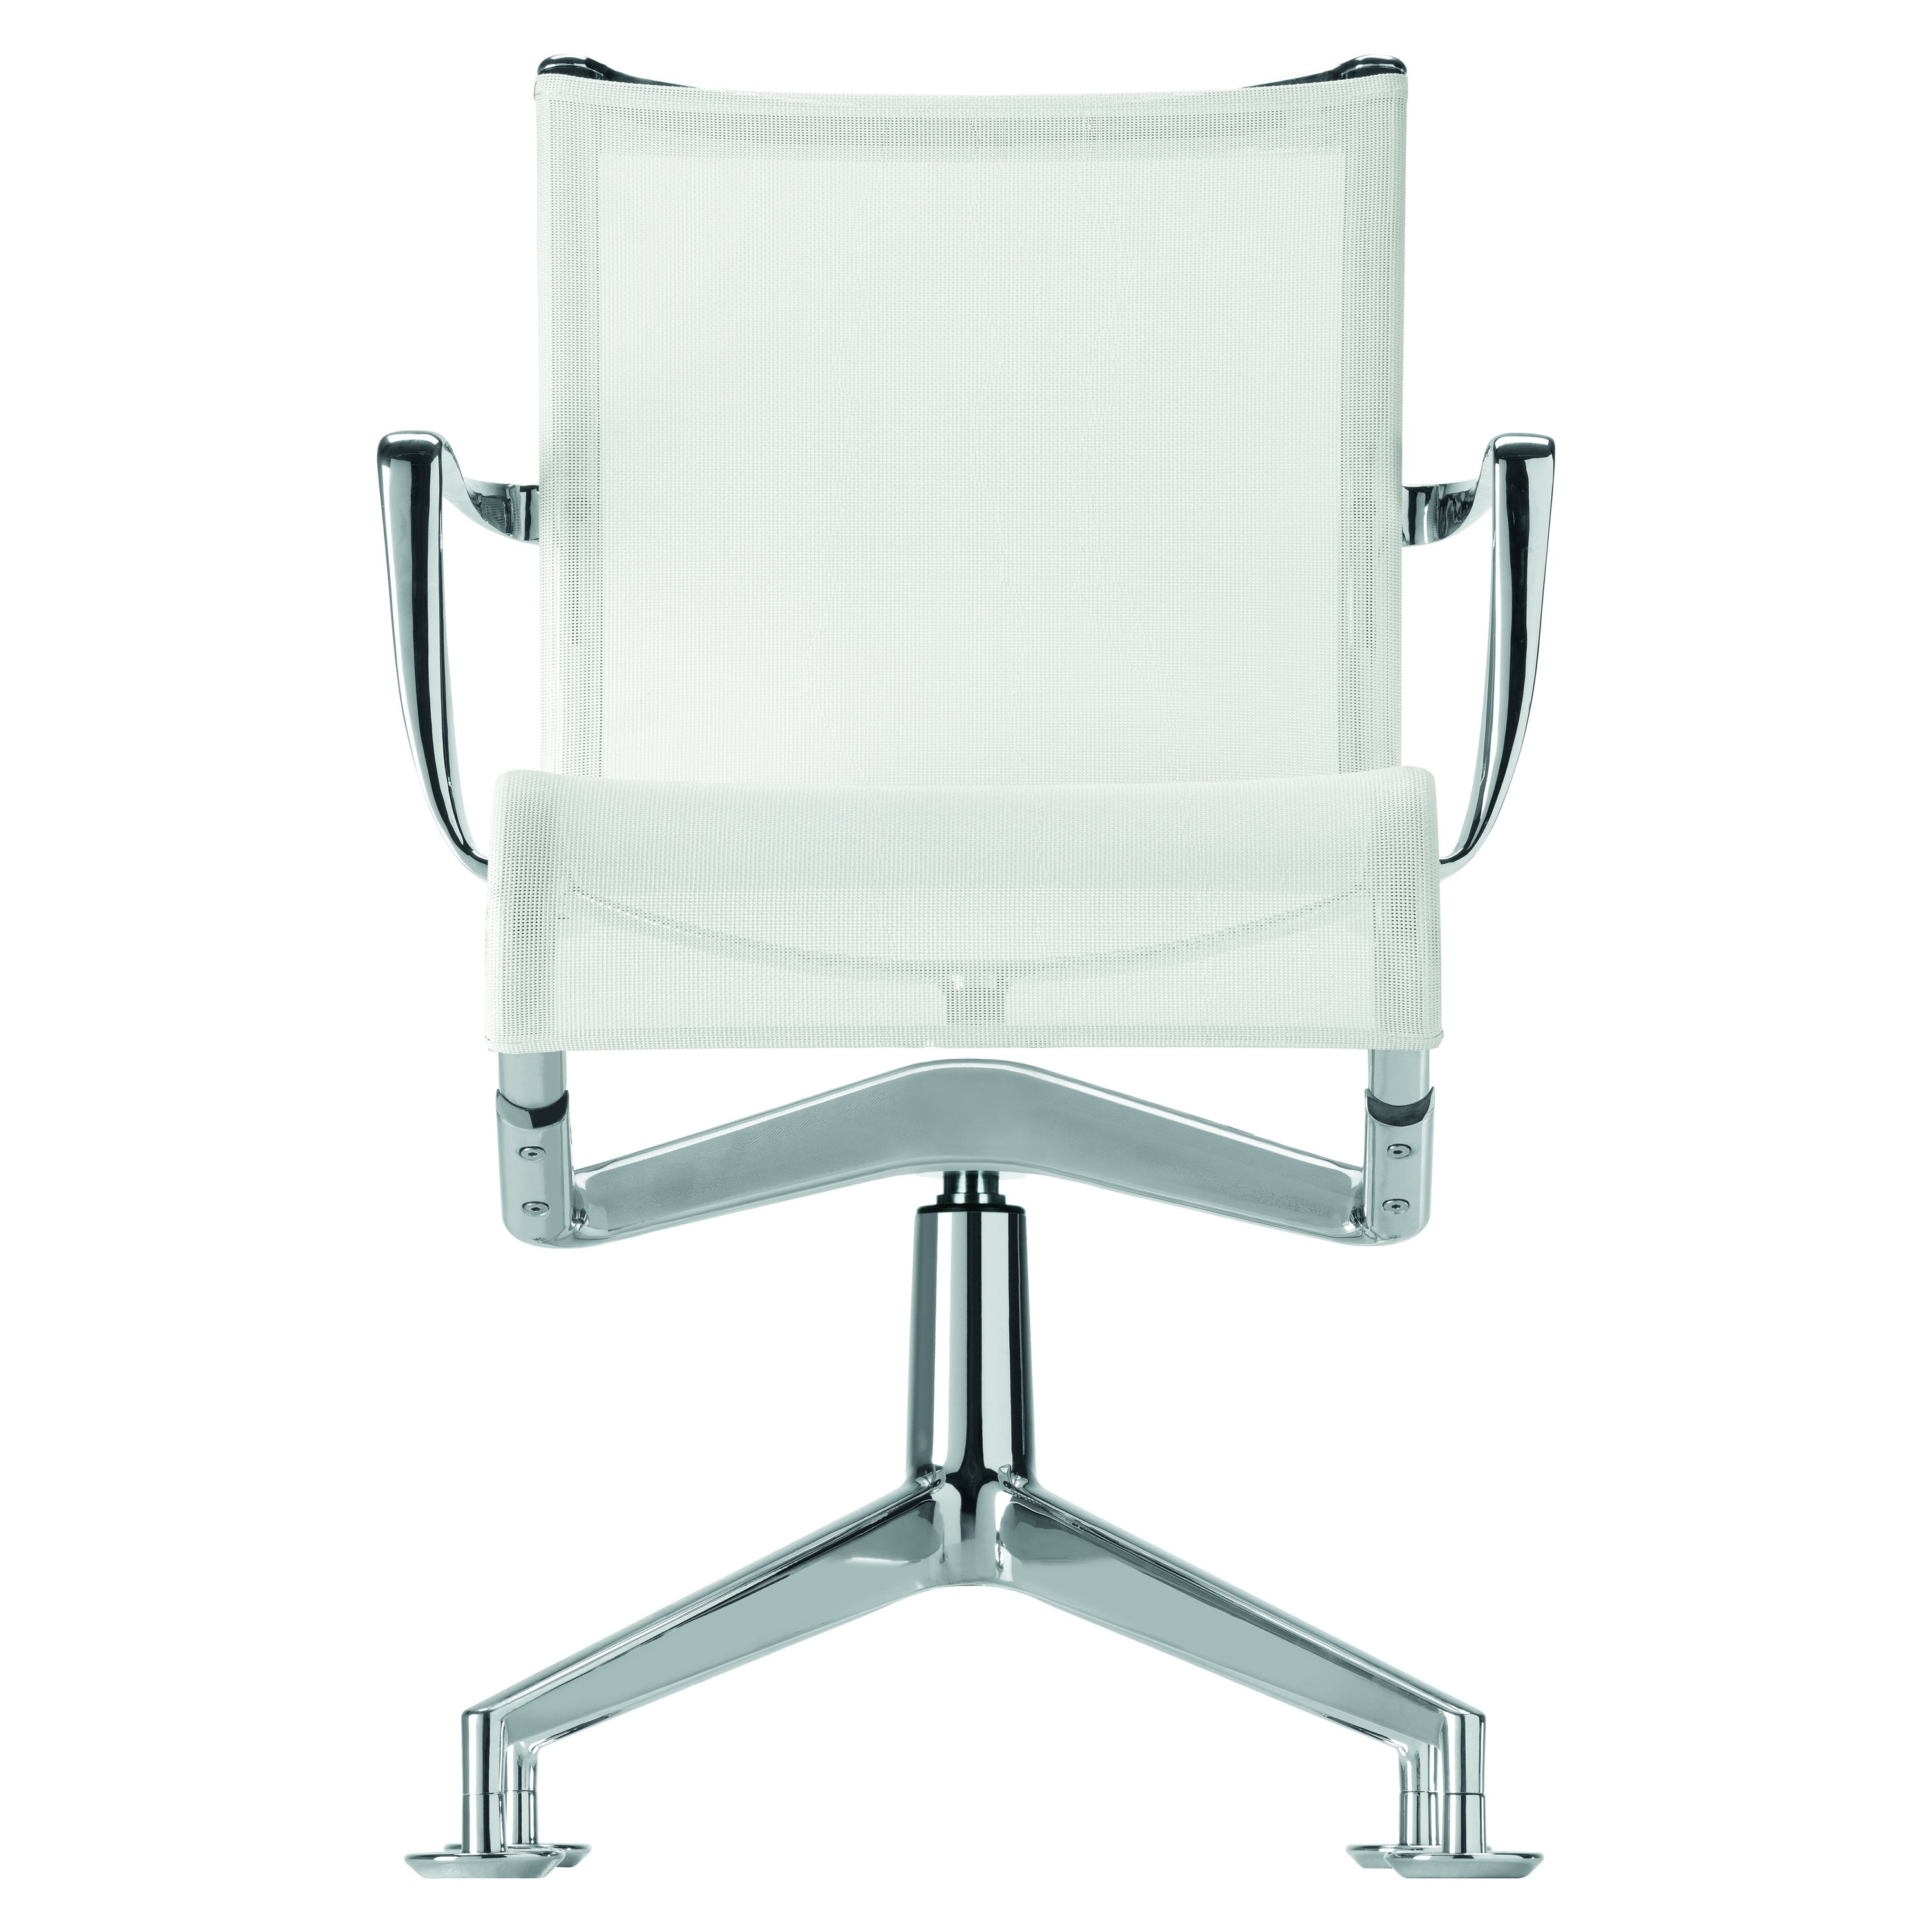 Alias 437 Meetingframe 44 Chair in White Mesh with Chromed Aluminum Frame For Sale